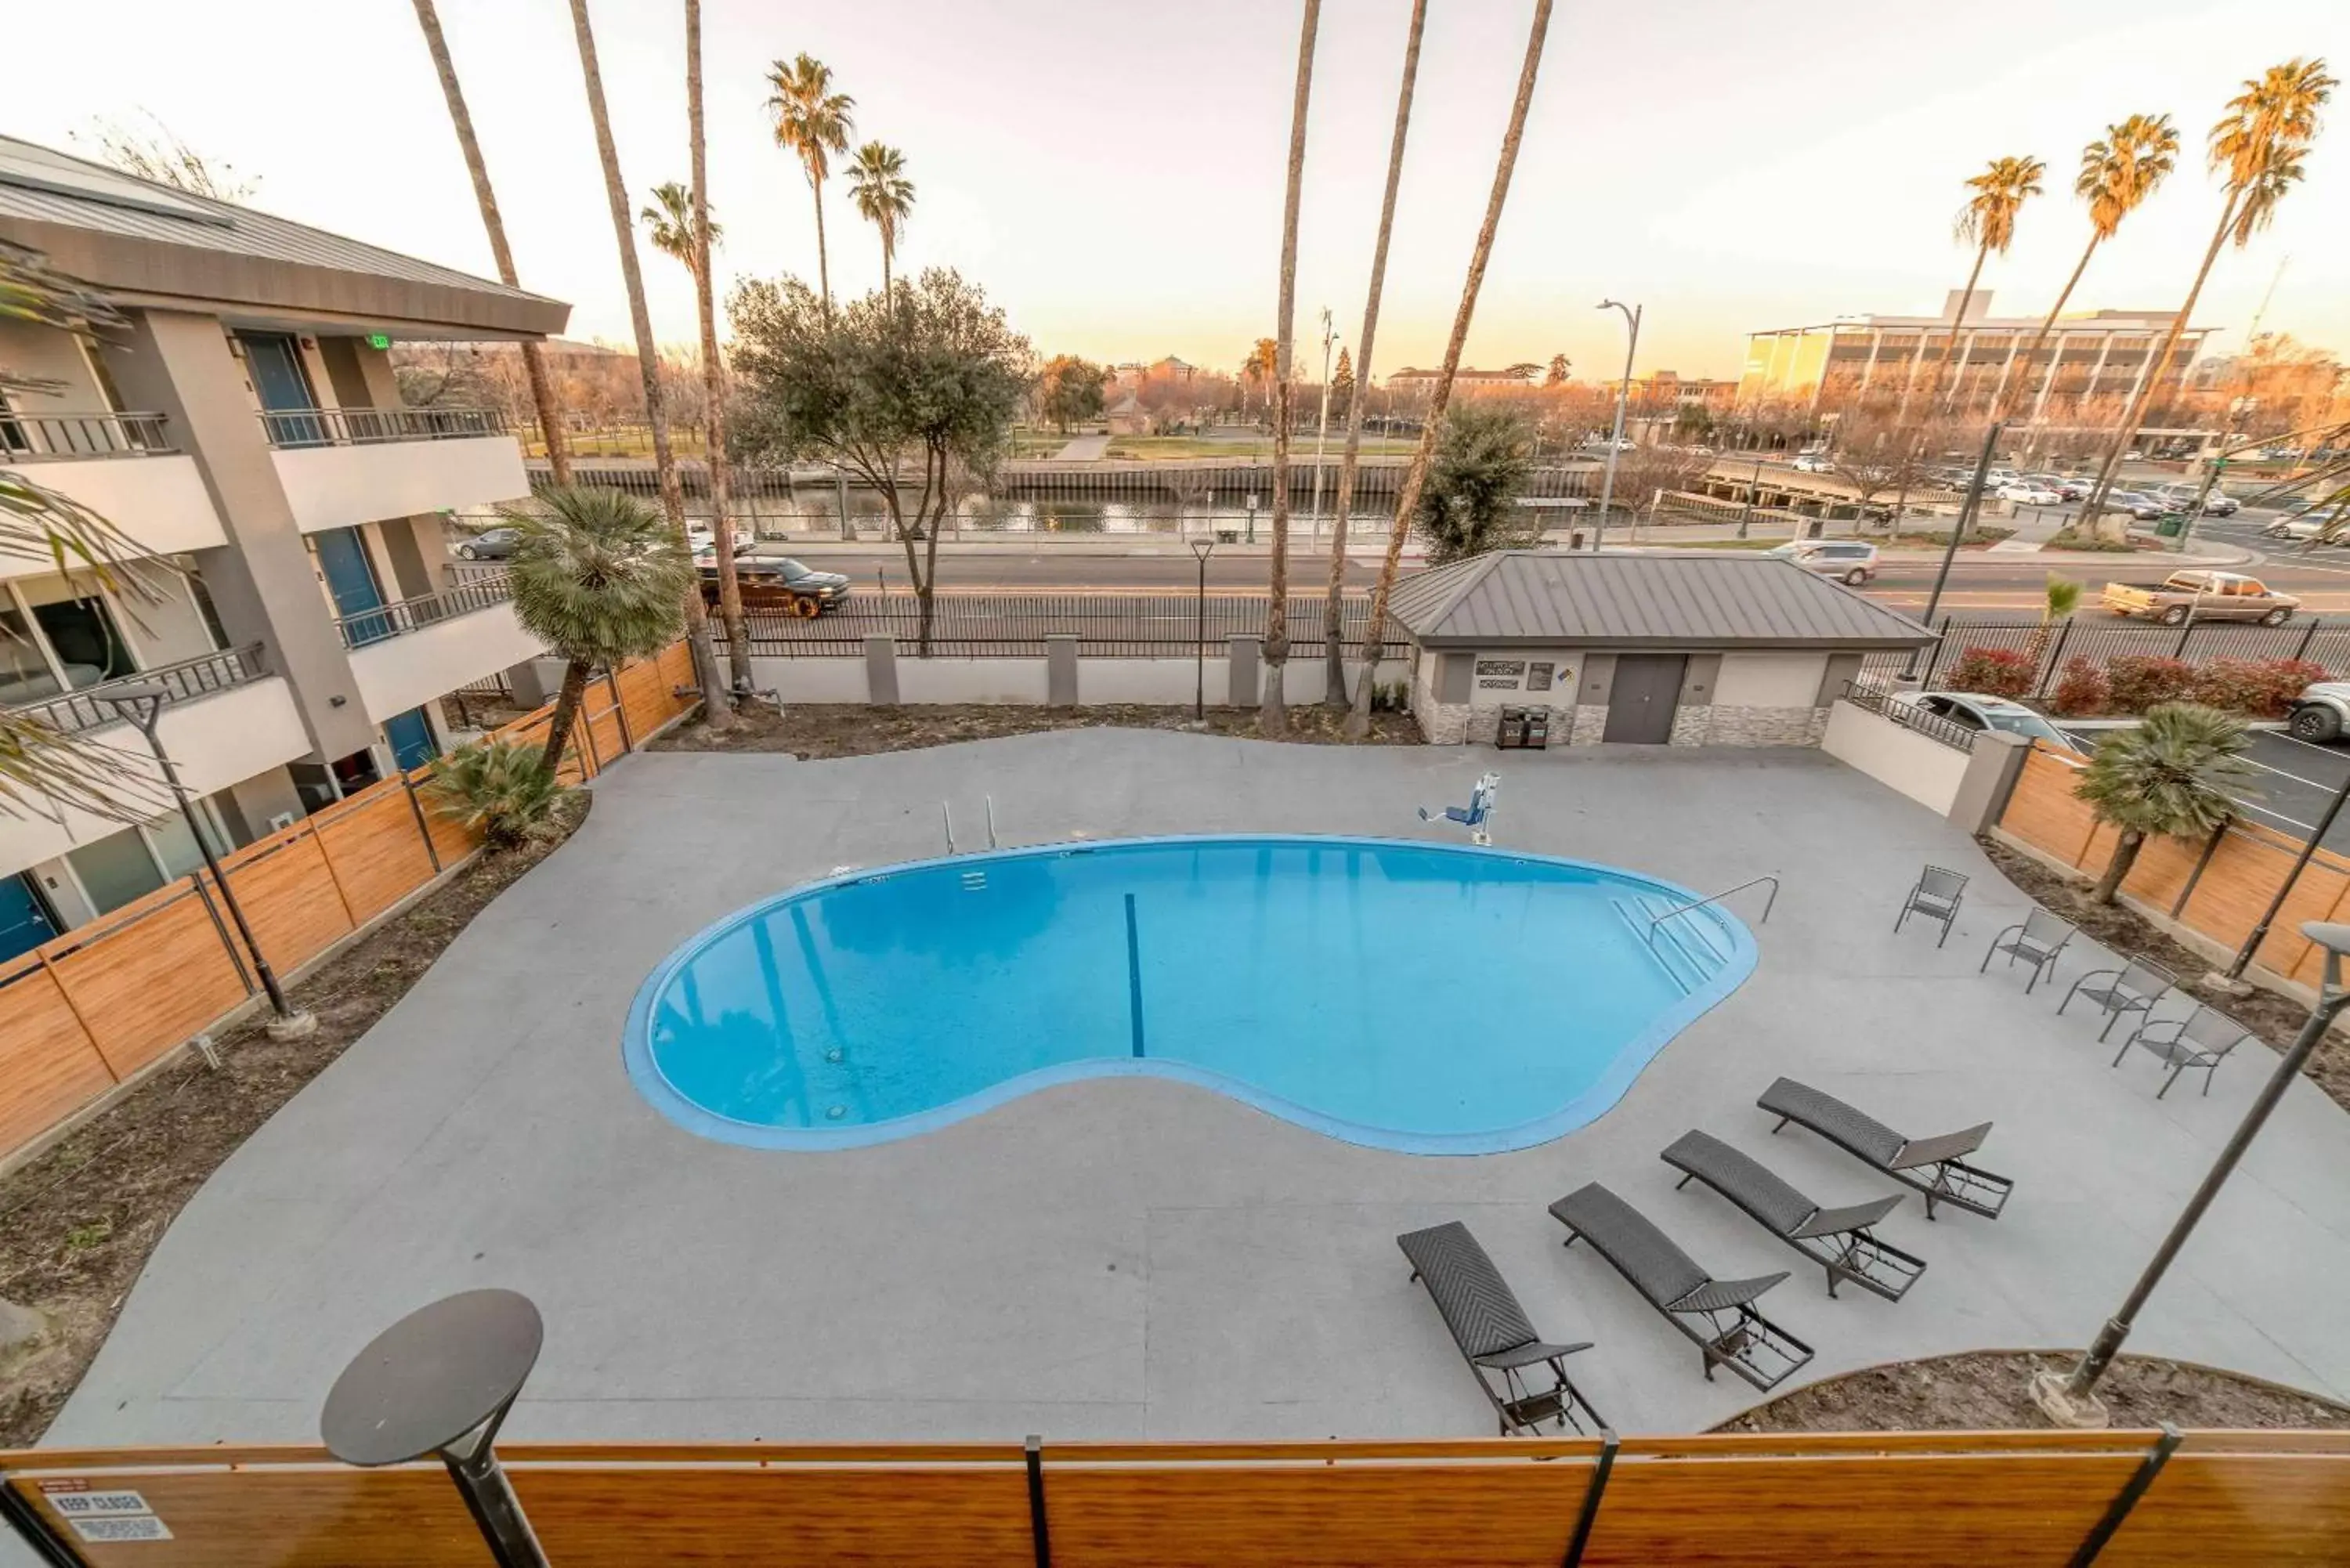 Pool View in Studio 6 Suites Stockton, CA Waterfront